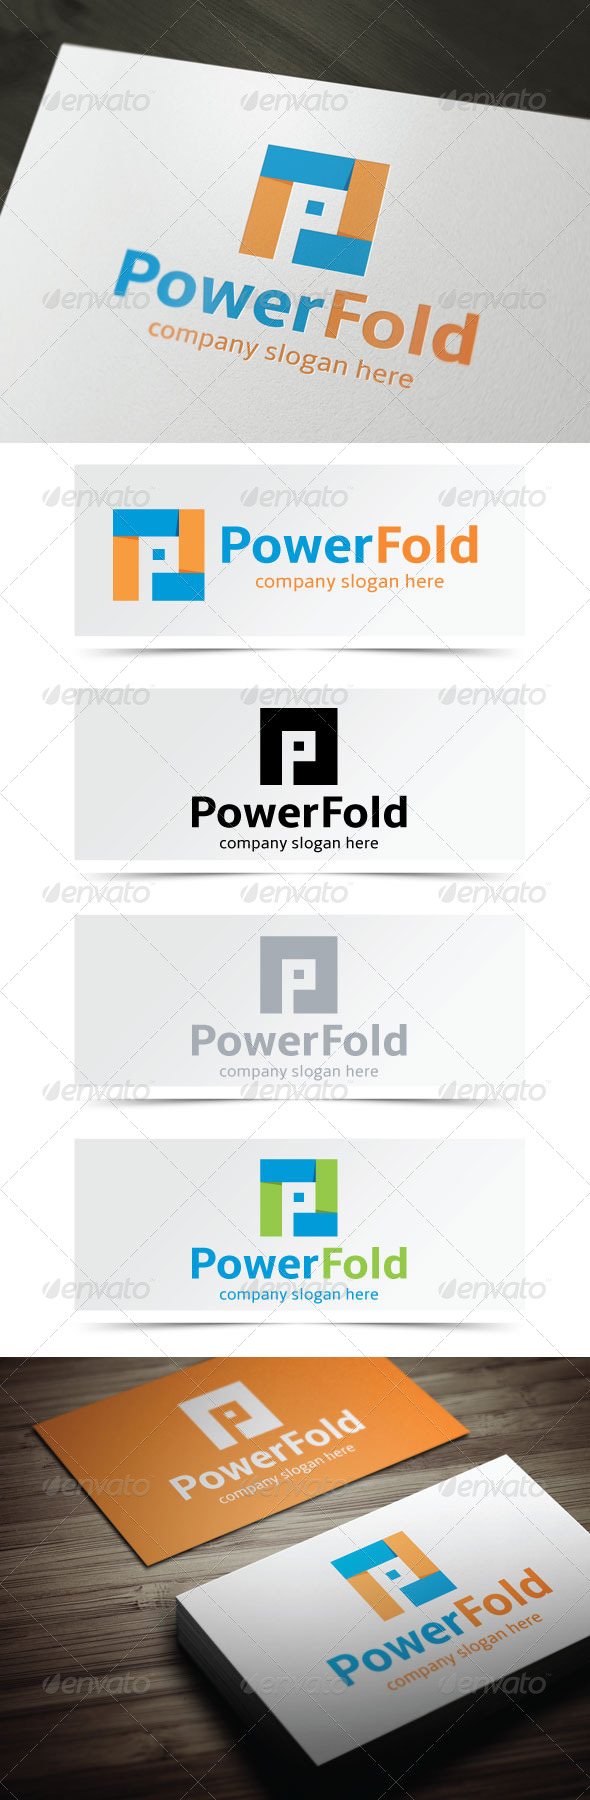 Power Fold